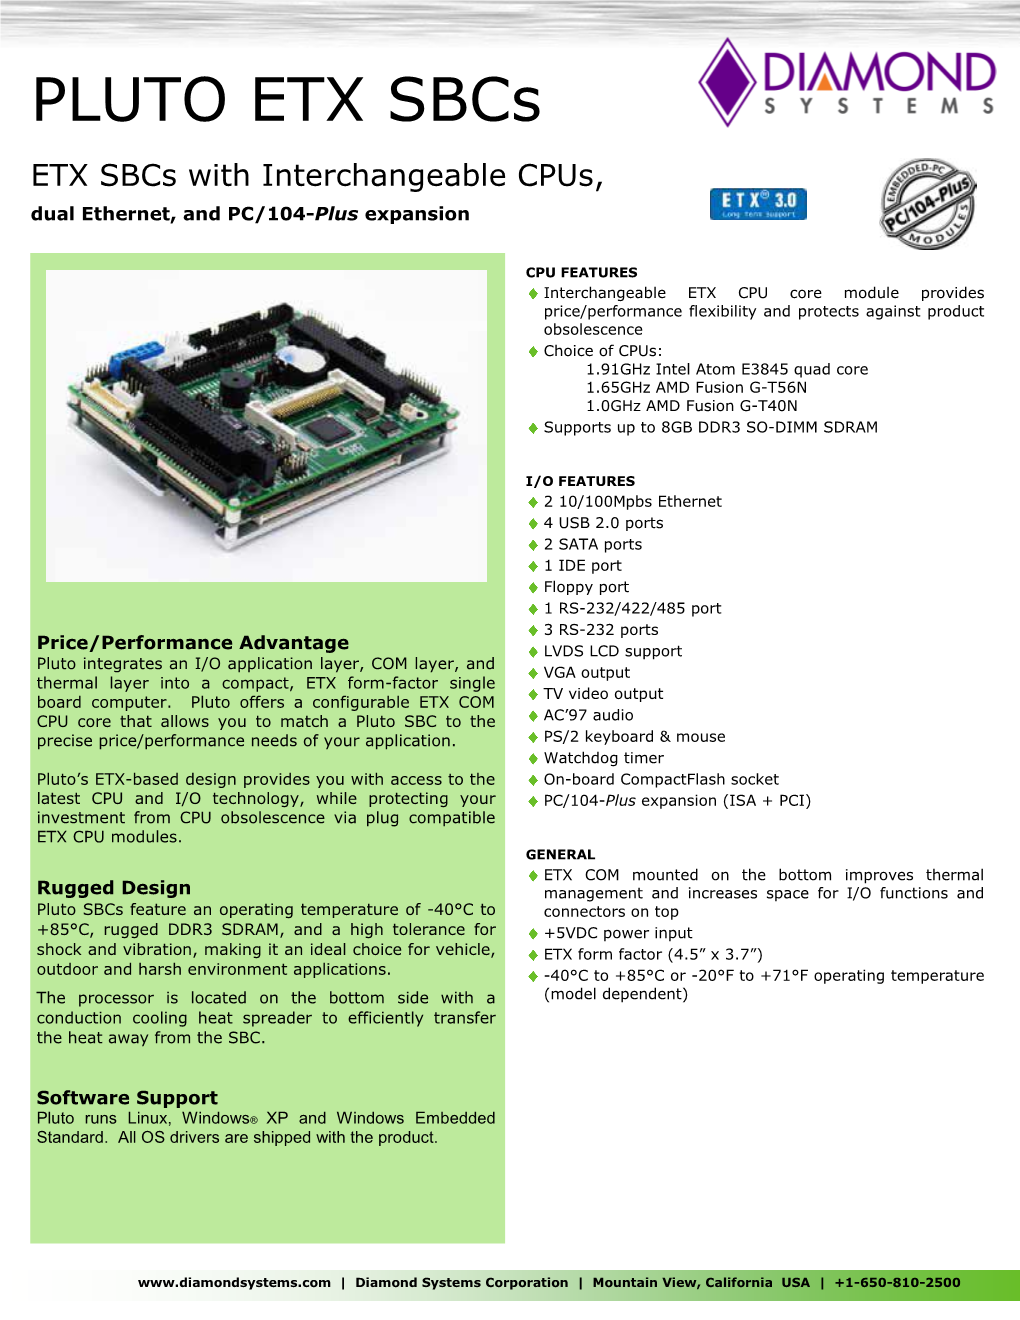 PLUTO ETX Sbcs ETX Sbcs with Interchangeable Cpus, Dual Ethernet, and PC/104-Plus Expansion